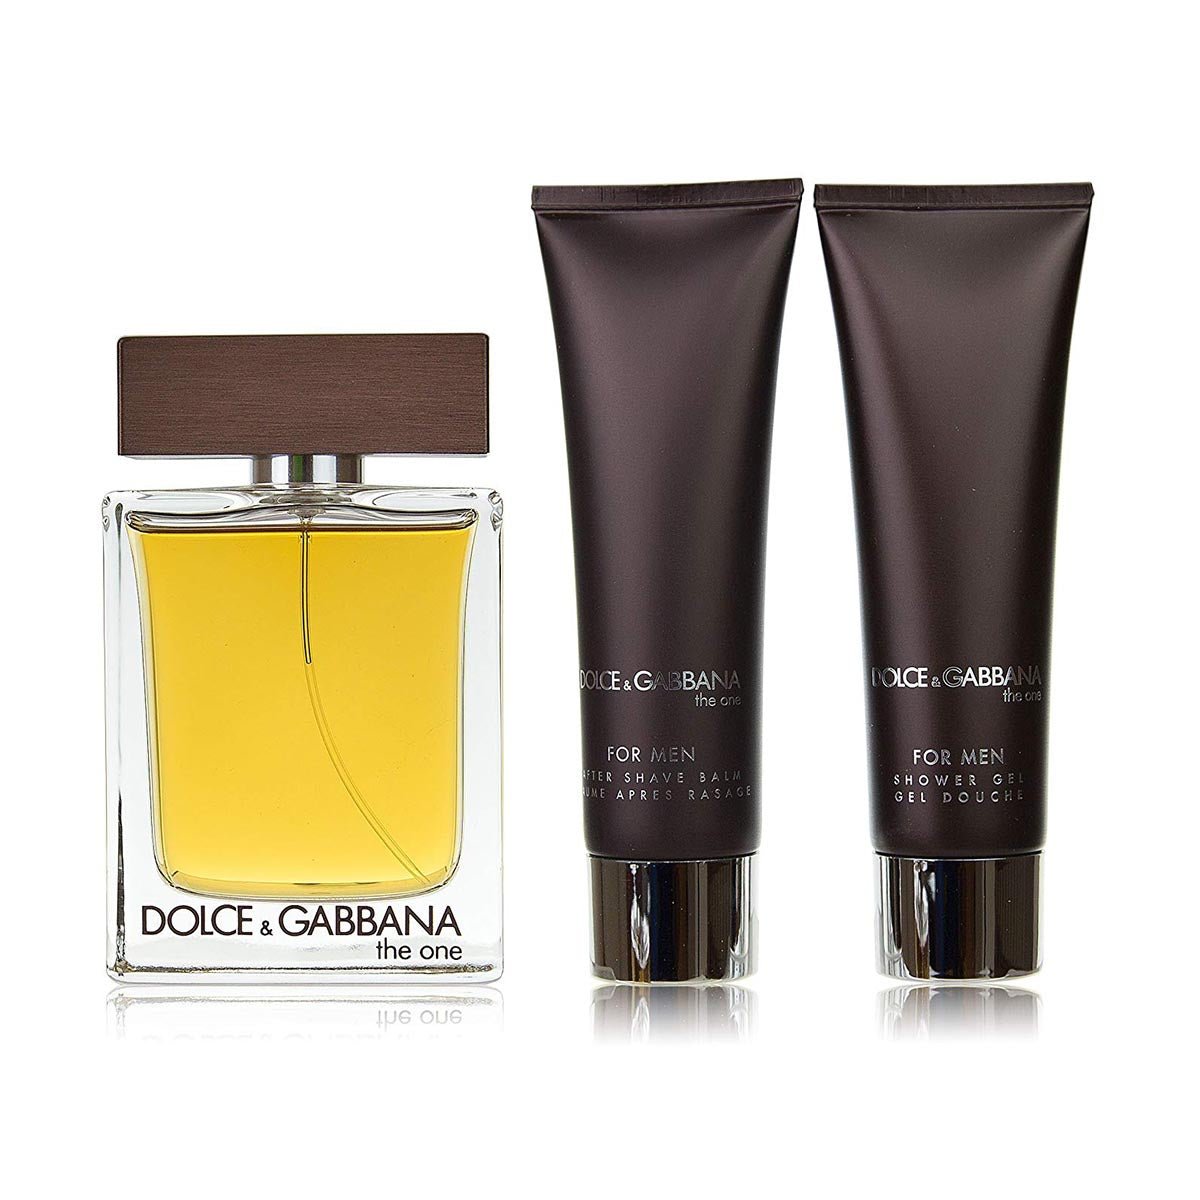 Dolce & Gabbana The One EDT Deluxe Gift Set | My Perfume Shop Australia